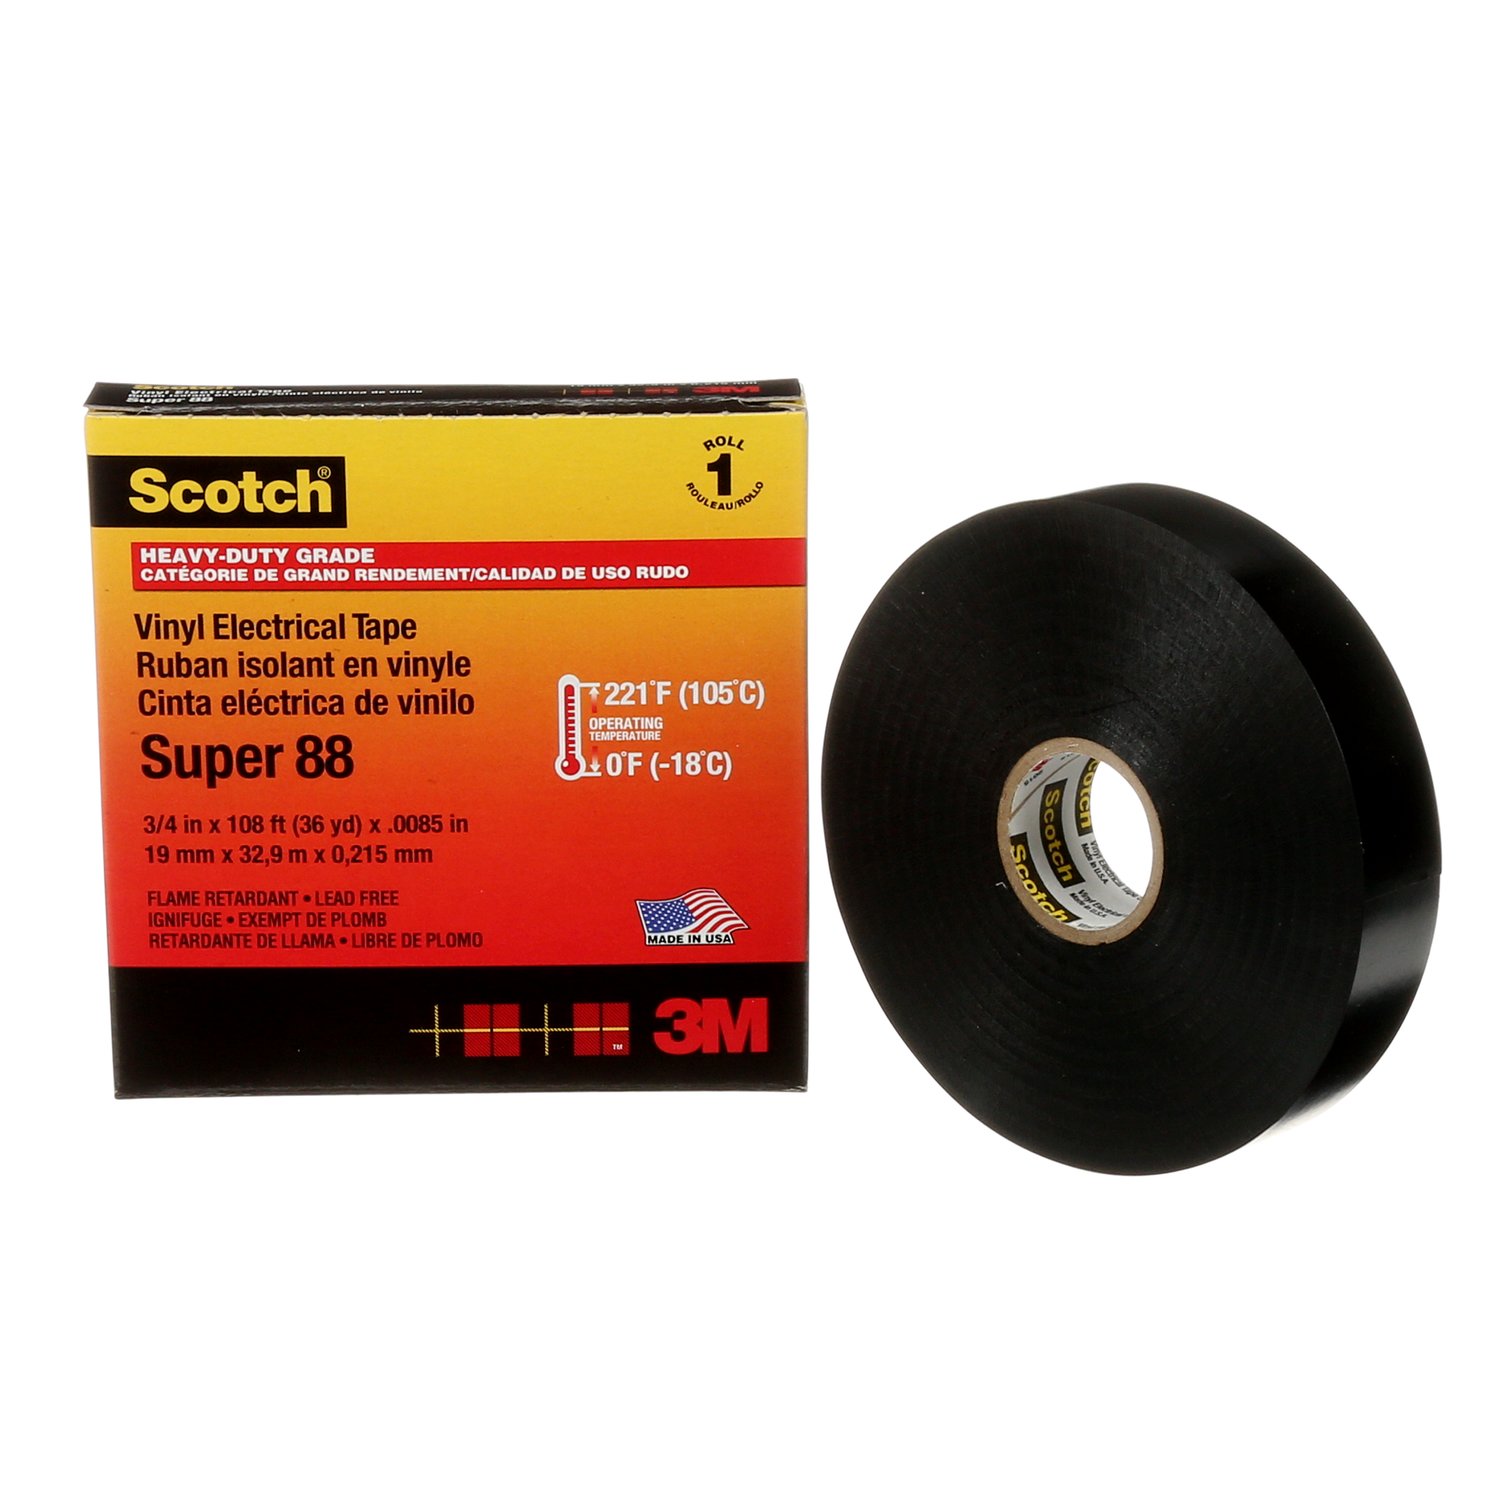 7000058434 - Scotch Vinyl Electrical Tape Super 88, 3/4 in x 36 yd, Black, 12
rolls/carton, 48 rolls/Case